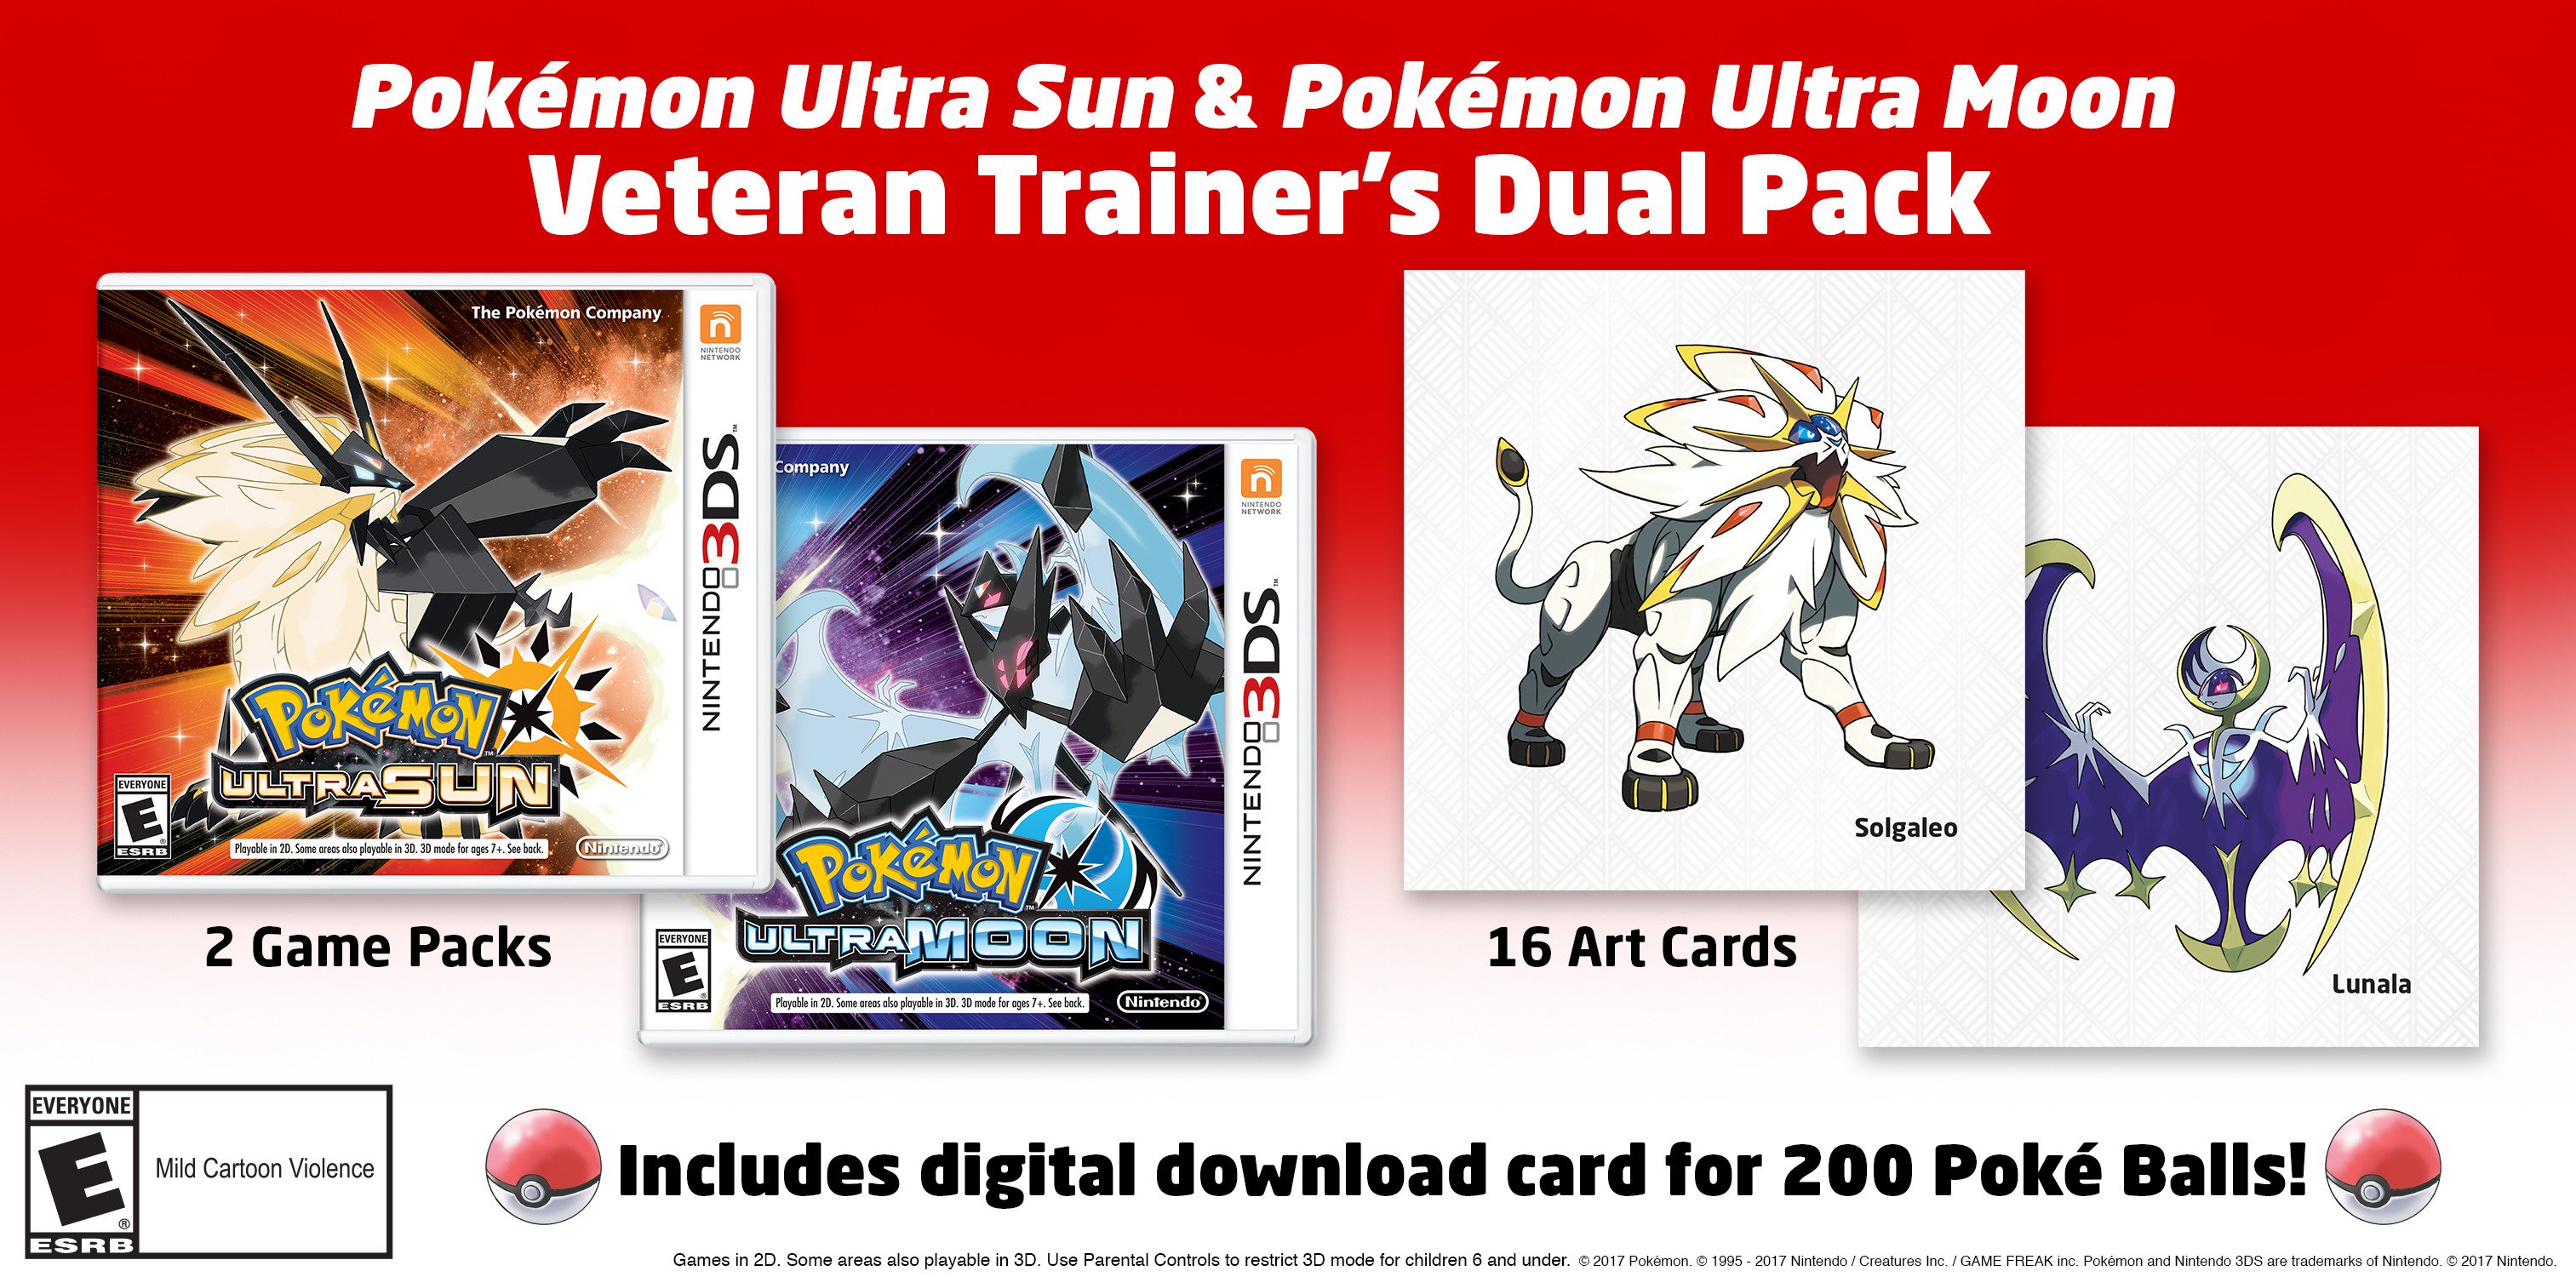 Nintendo anuncia pacote especial com Pokémon Ultra Sun e Ultra Moon 29163624714104